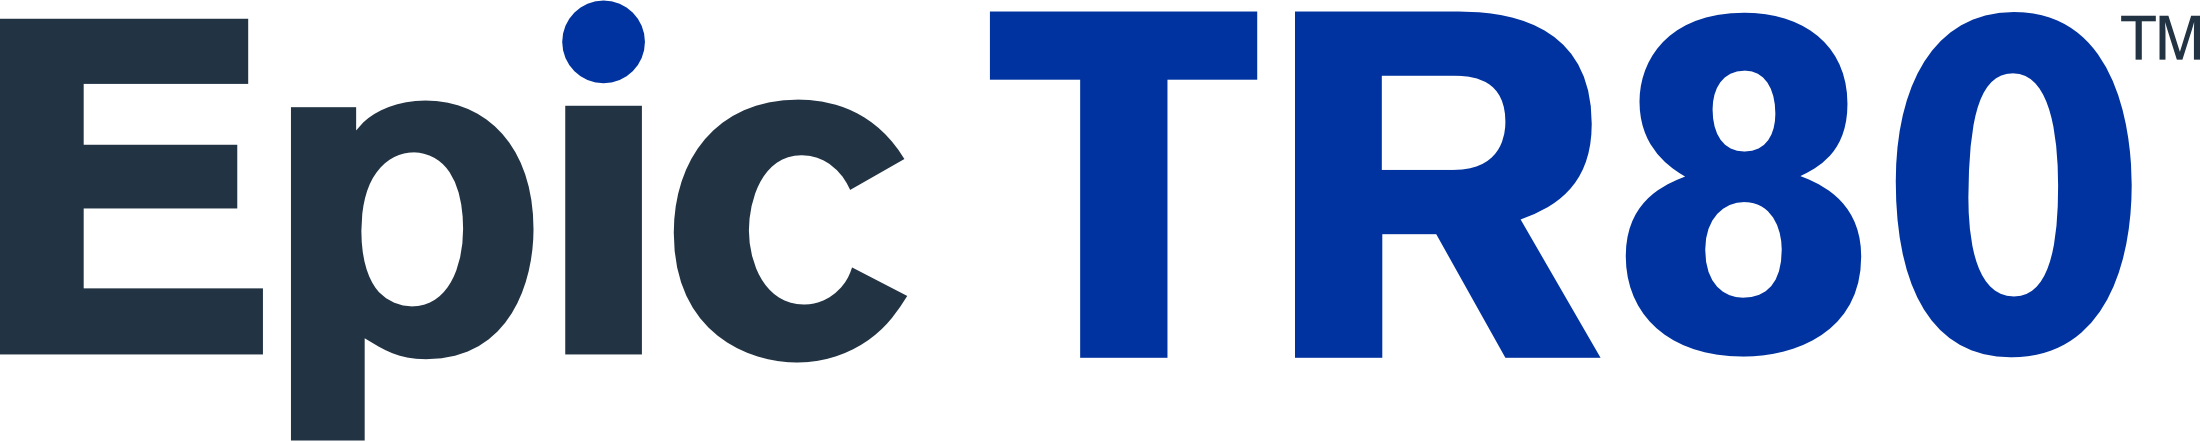 TACT Logo EpicTR80